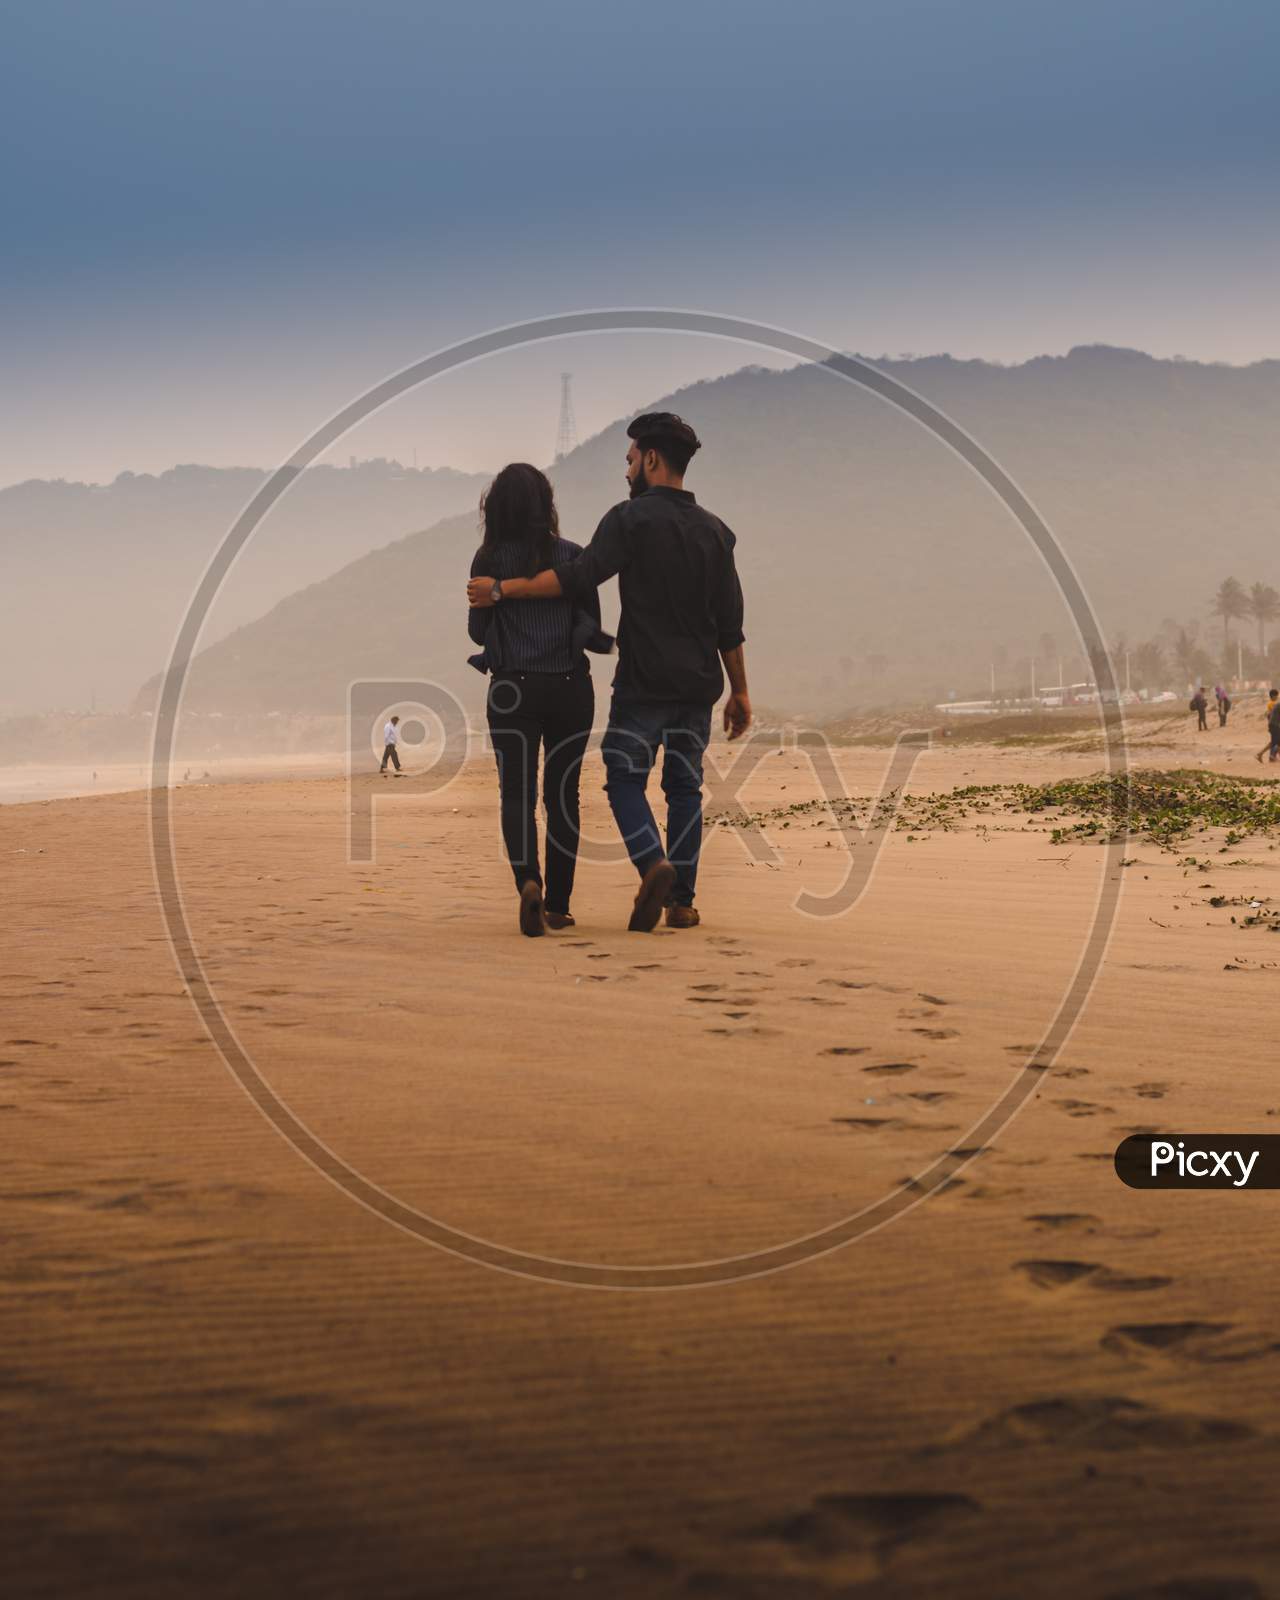 A Couple Walking In a Beach